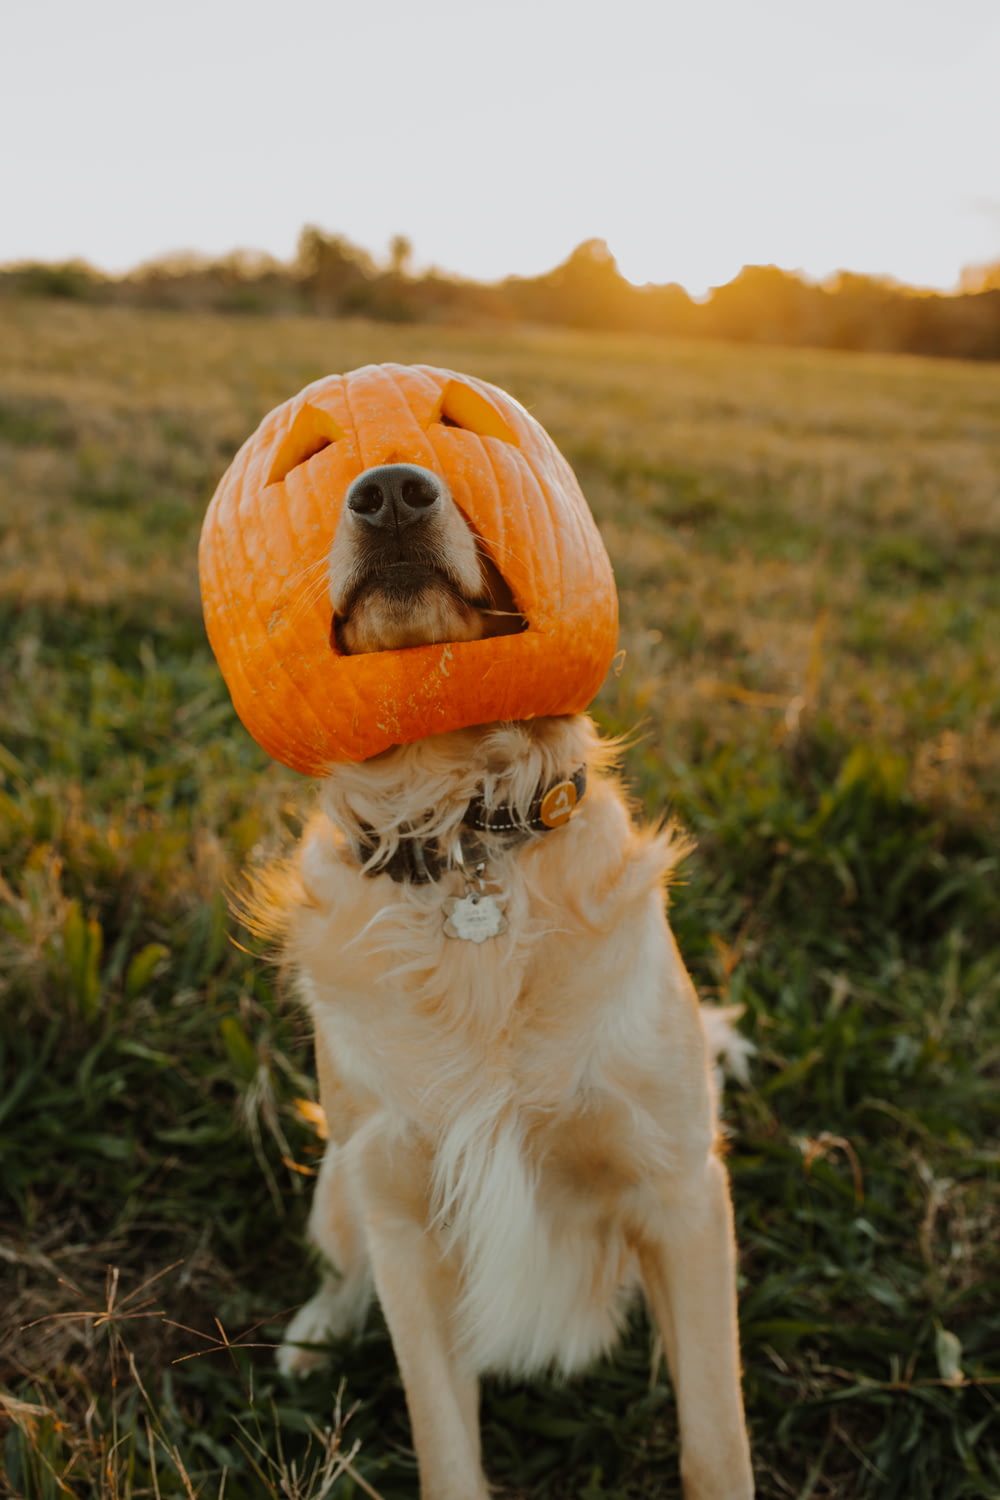 a dog with a pumpkin on its head